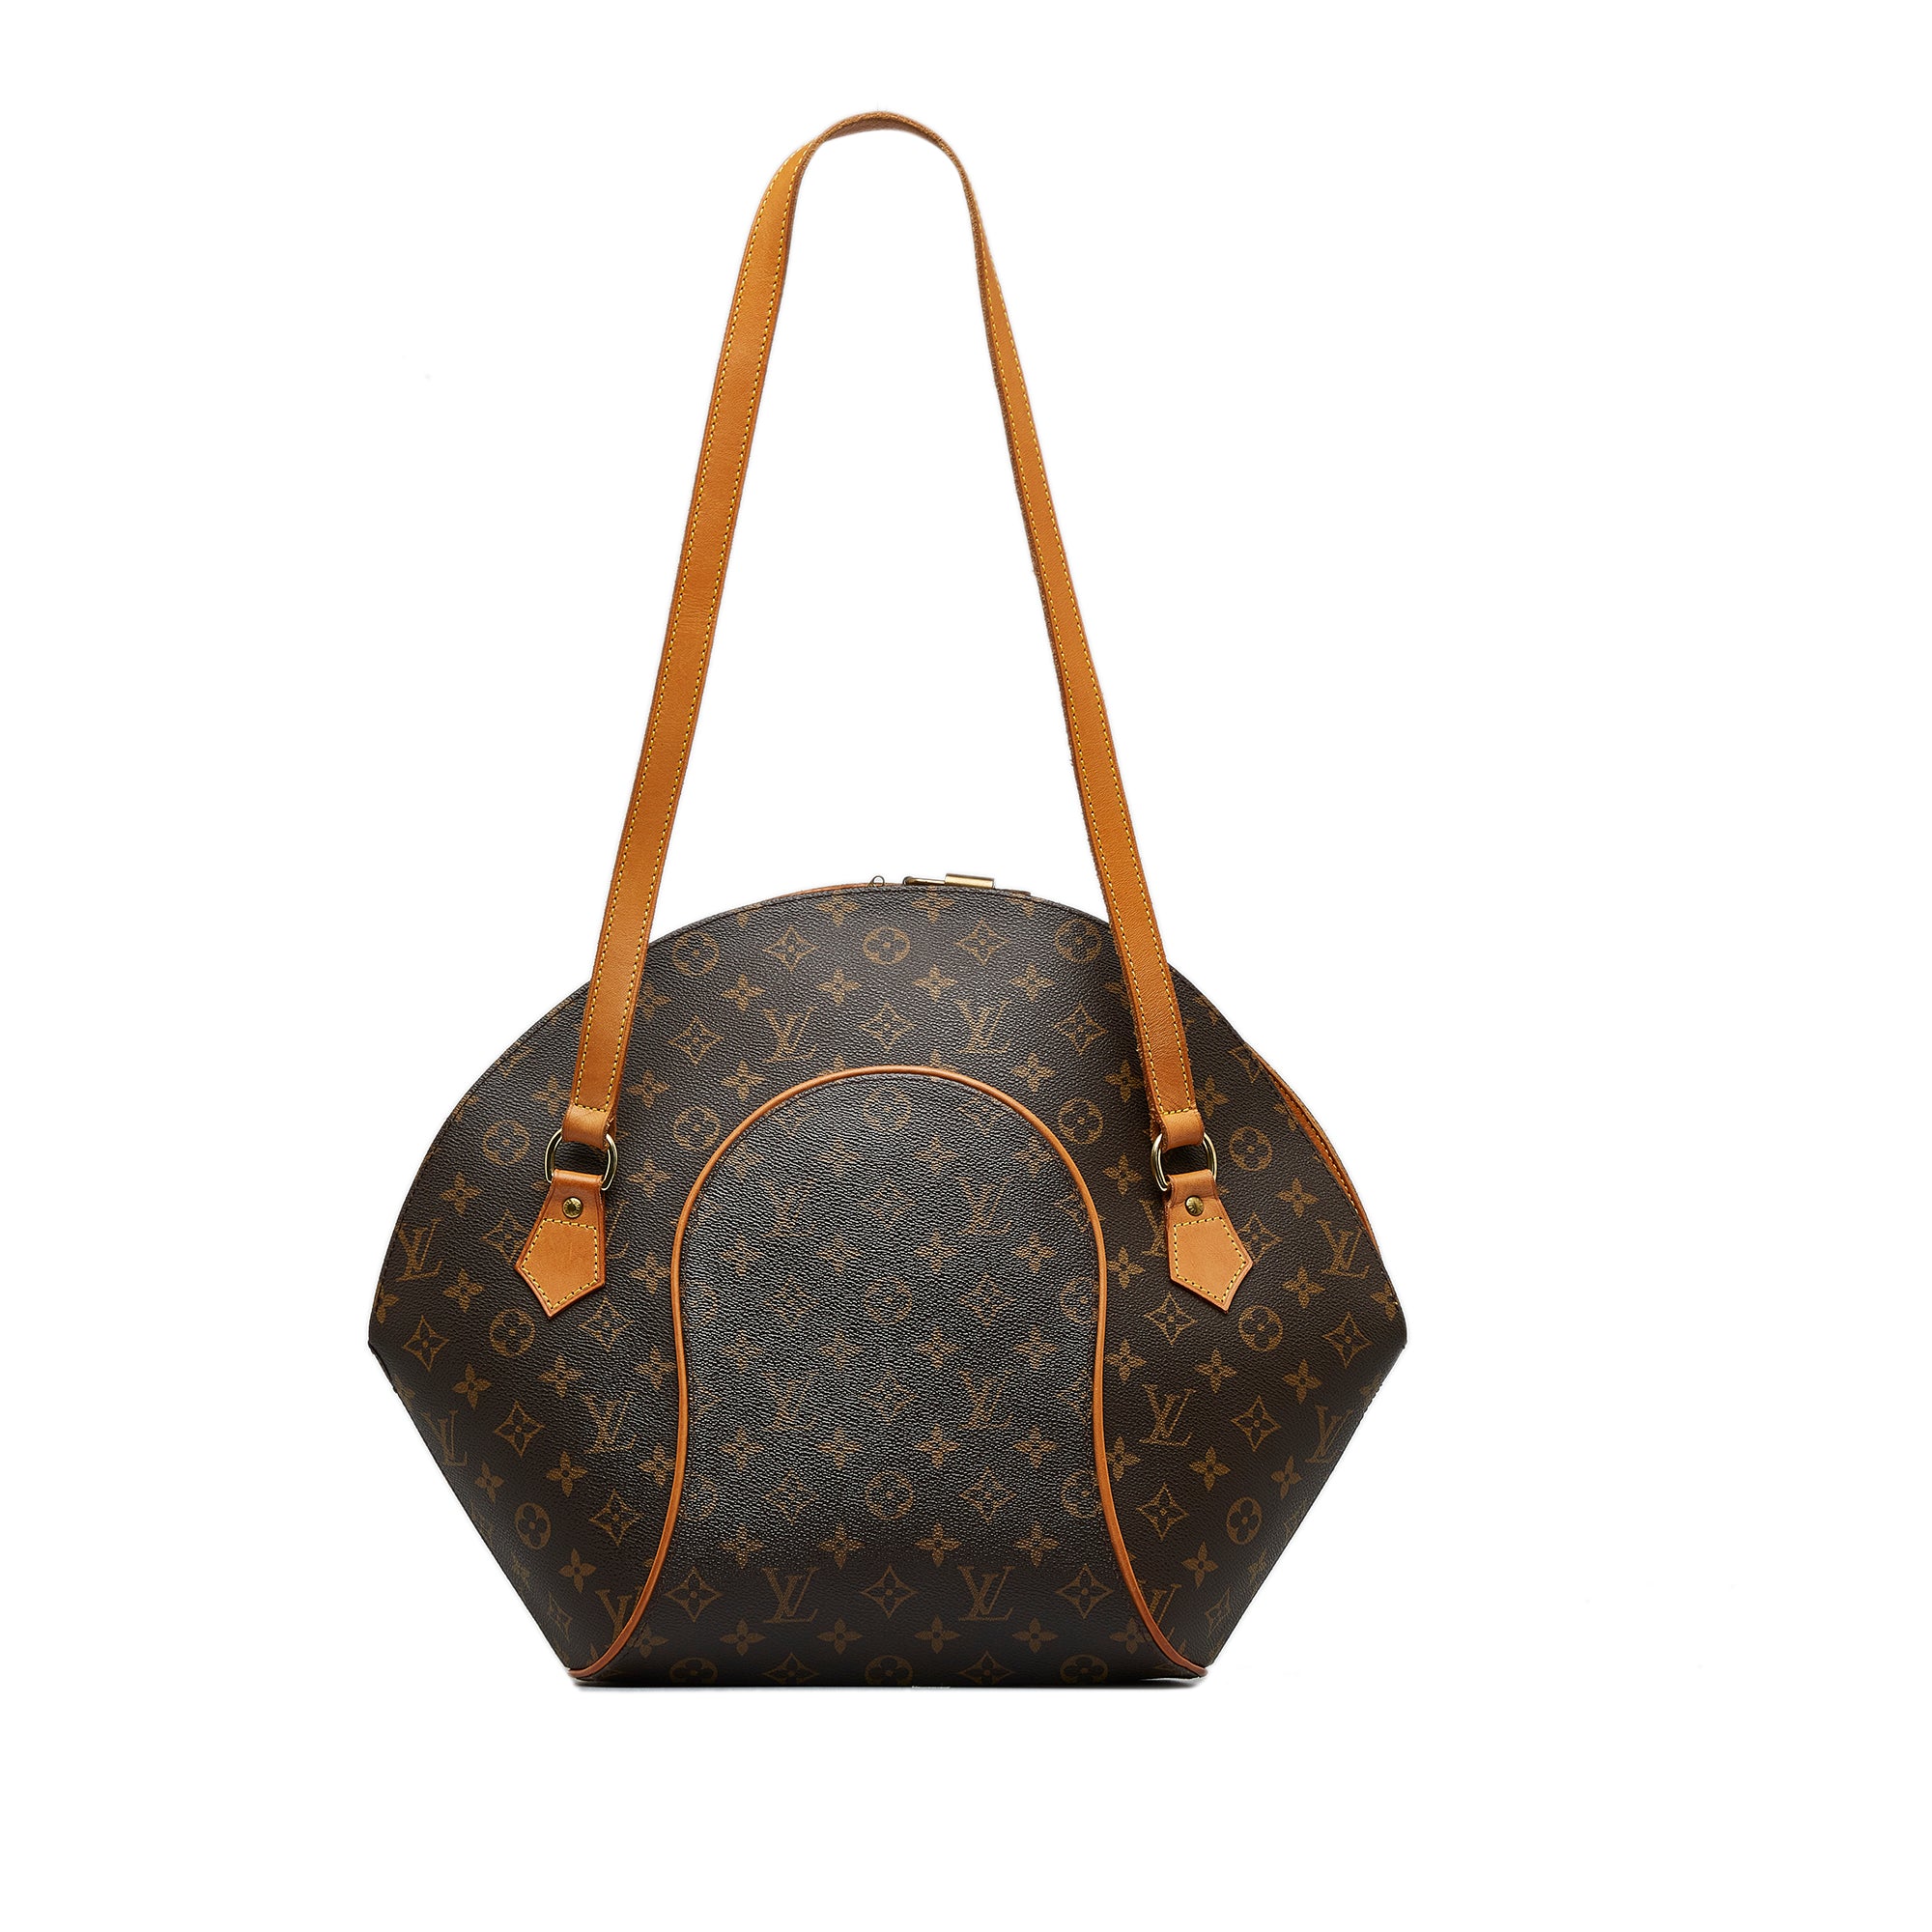 Pre-Owned Louis Vuitton Ellipse Monogram MM Handbag - Good